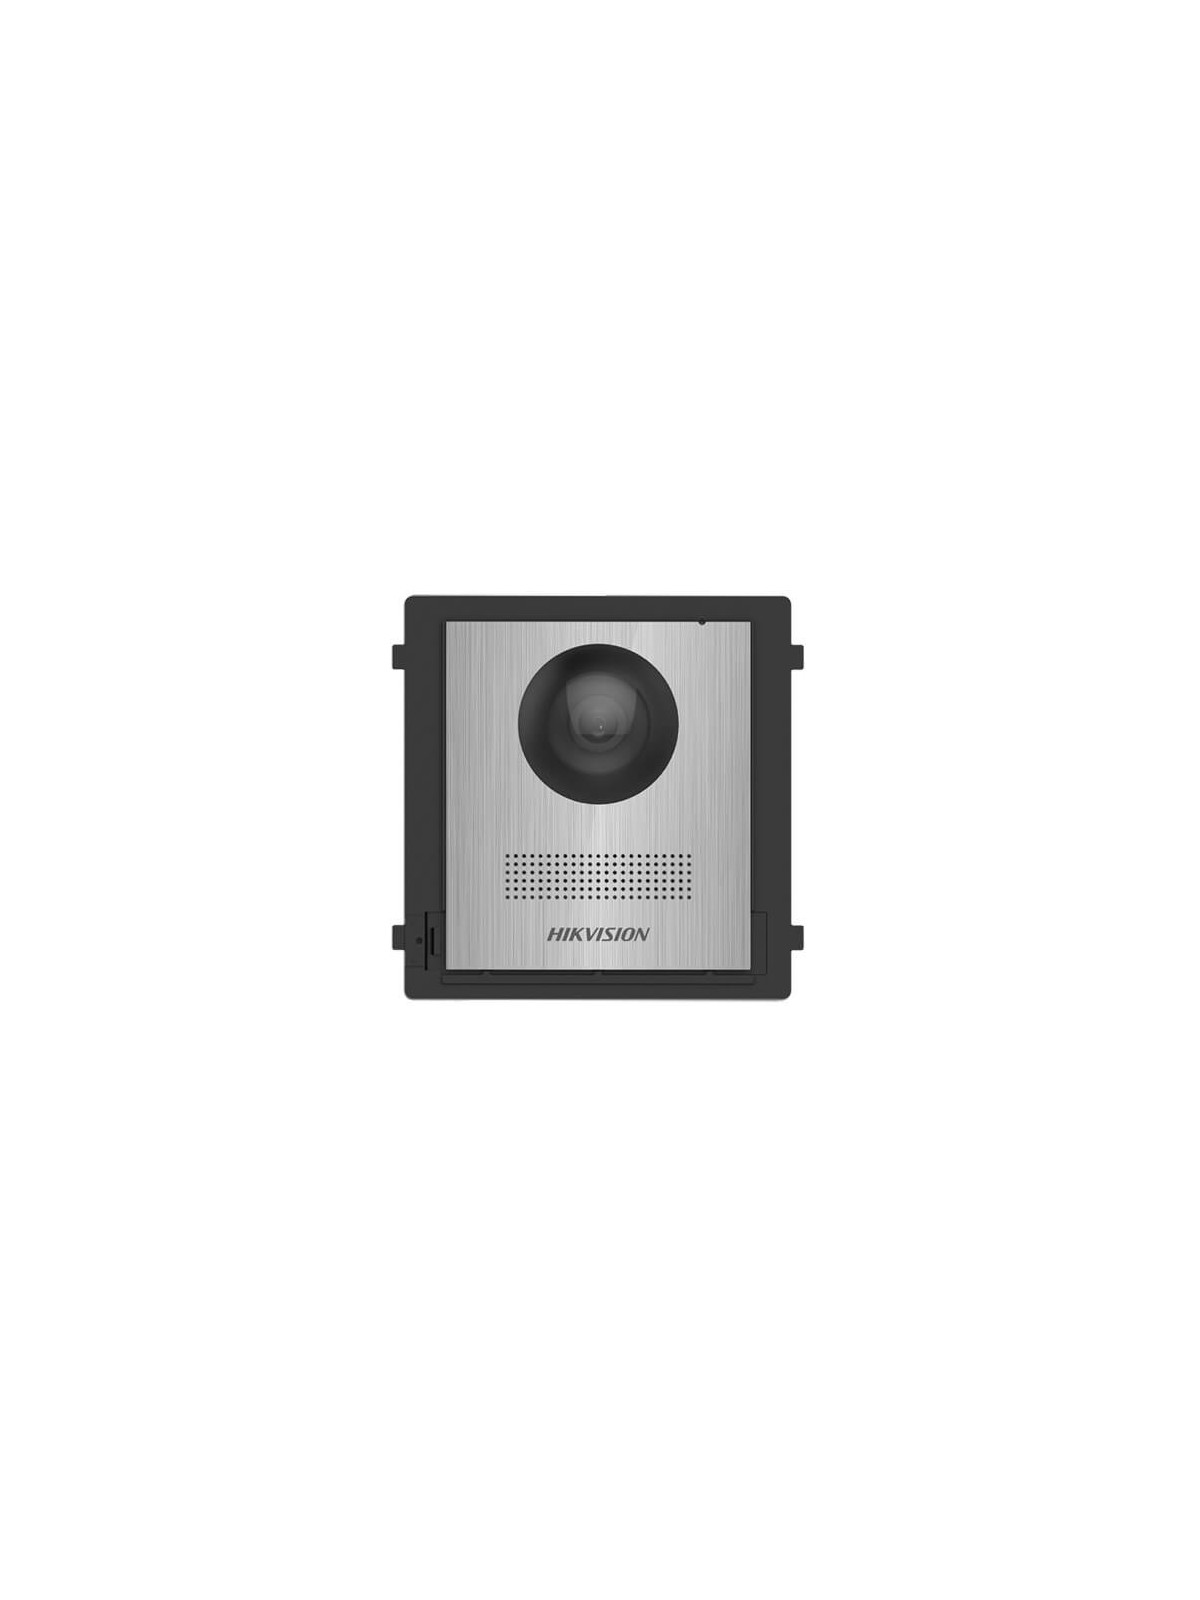 Videoportero IP  modular Hikvision DS-KD8003-IME1/NS cámara 2MP Alarmas Inox